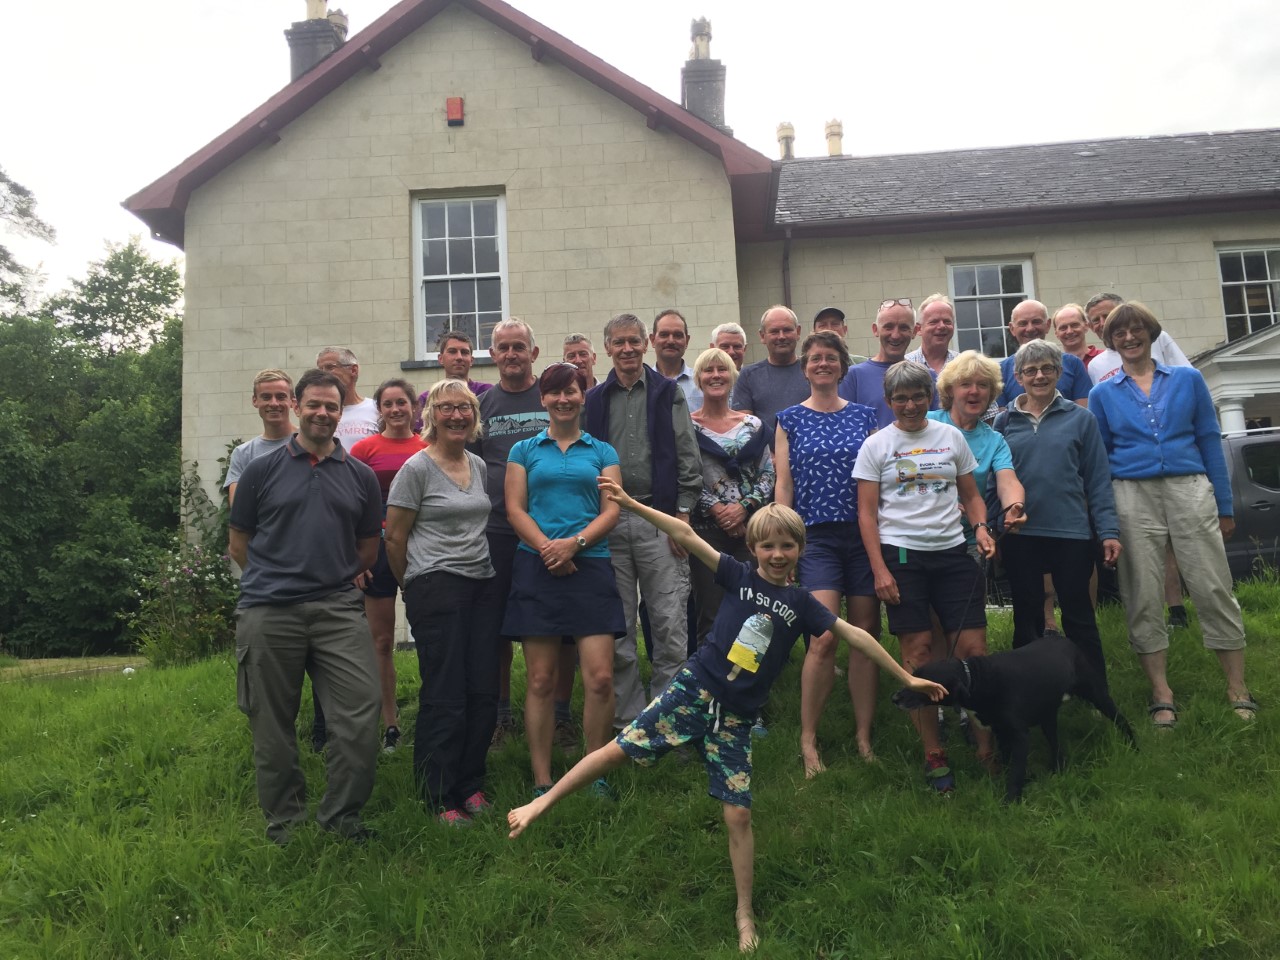 Aberystwyth, mid Wales, UK. Volunteers’ seminars about planning and organising in orienteering.